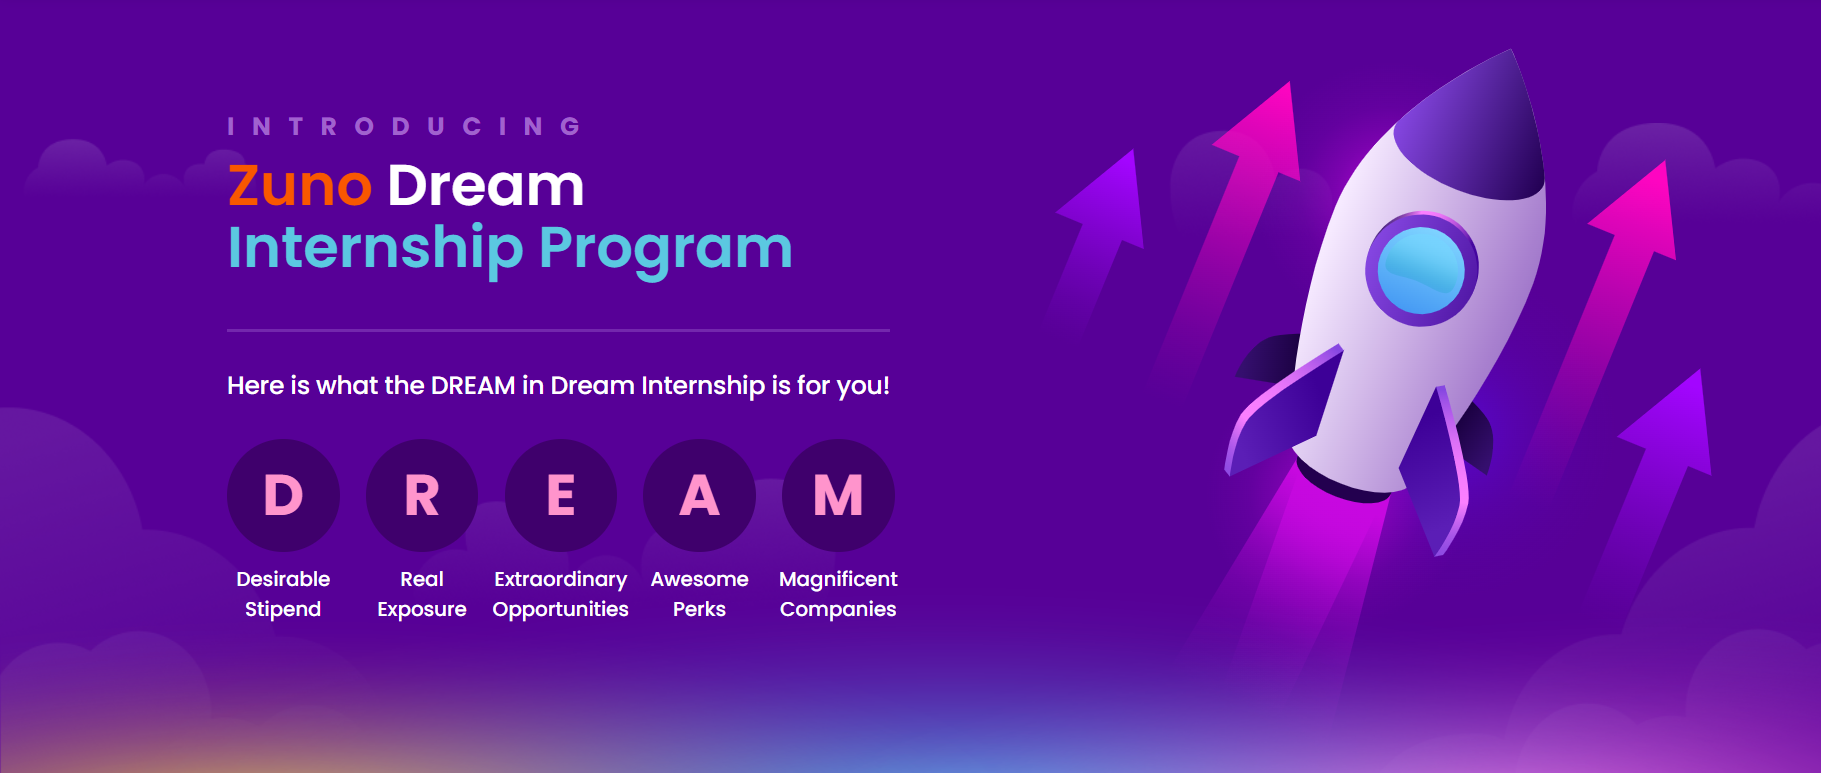 Zuno Dream Internship Program